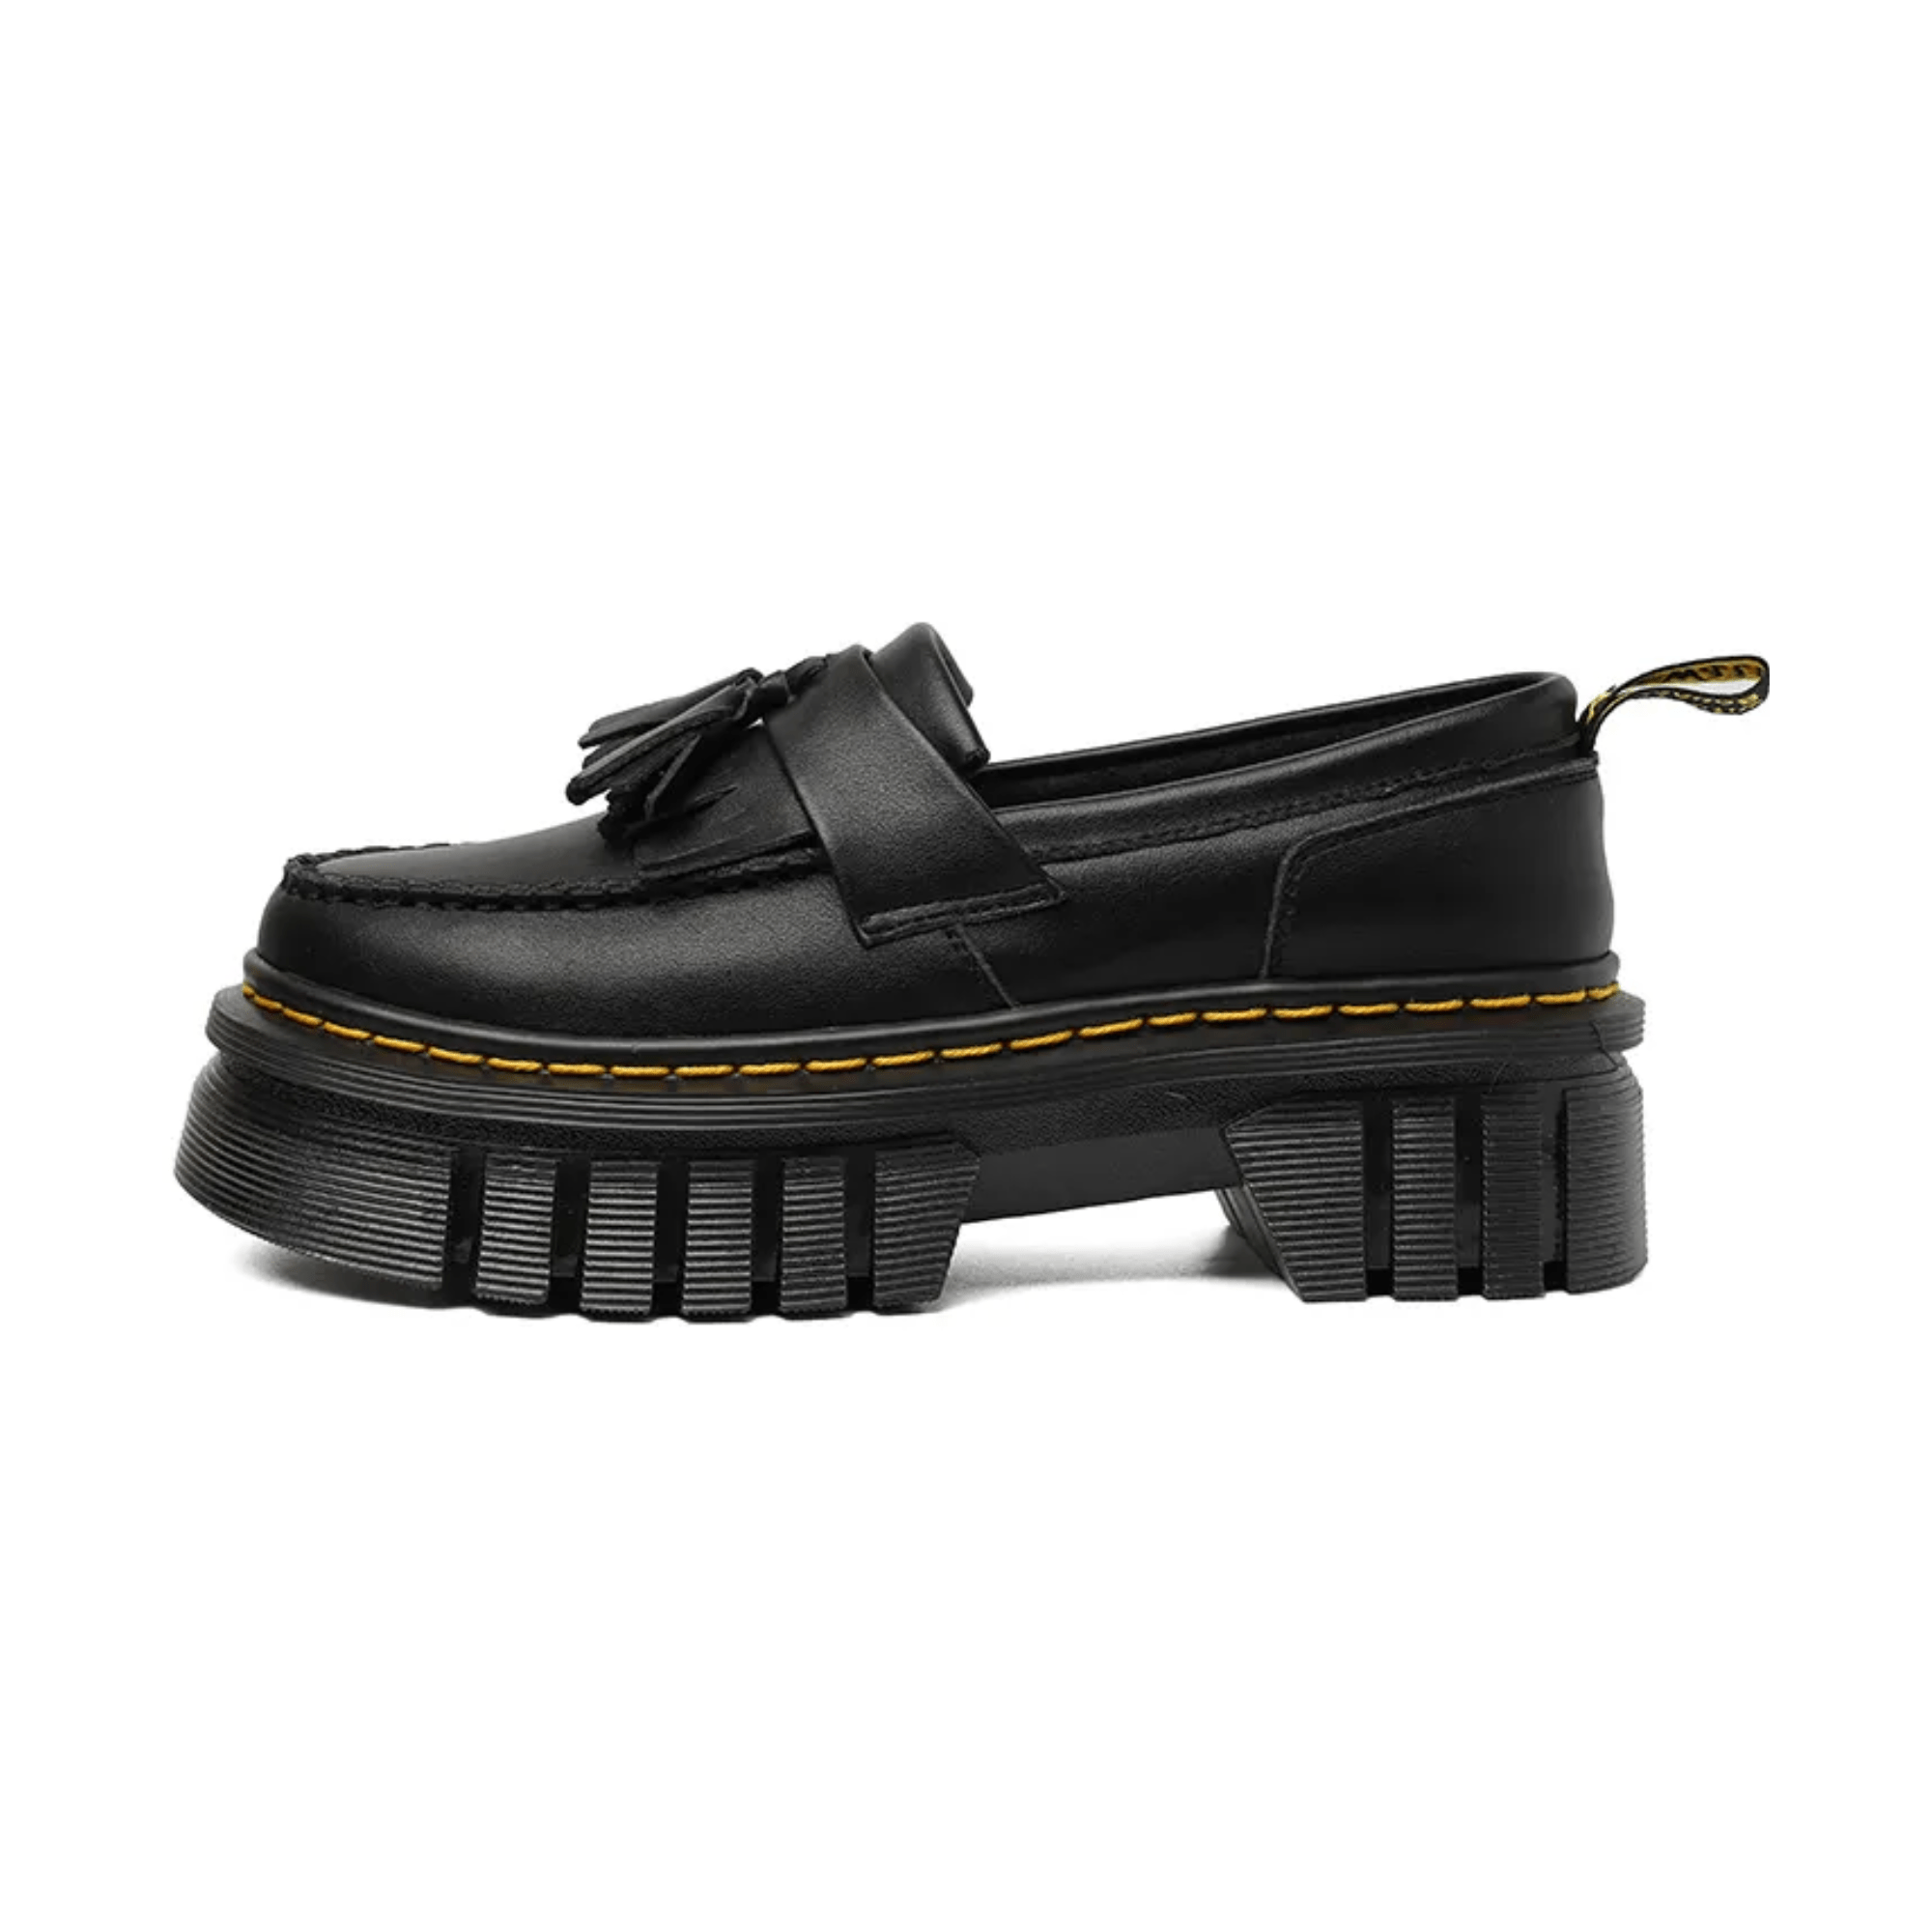 Contrast Overstitch Leather Platform Shoes - Kelly Obi New York